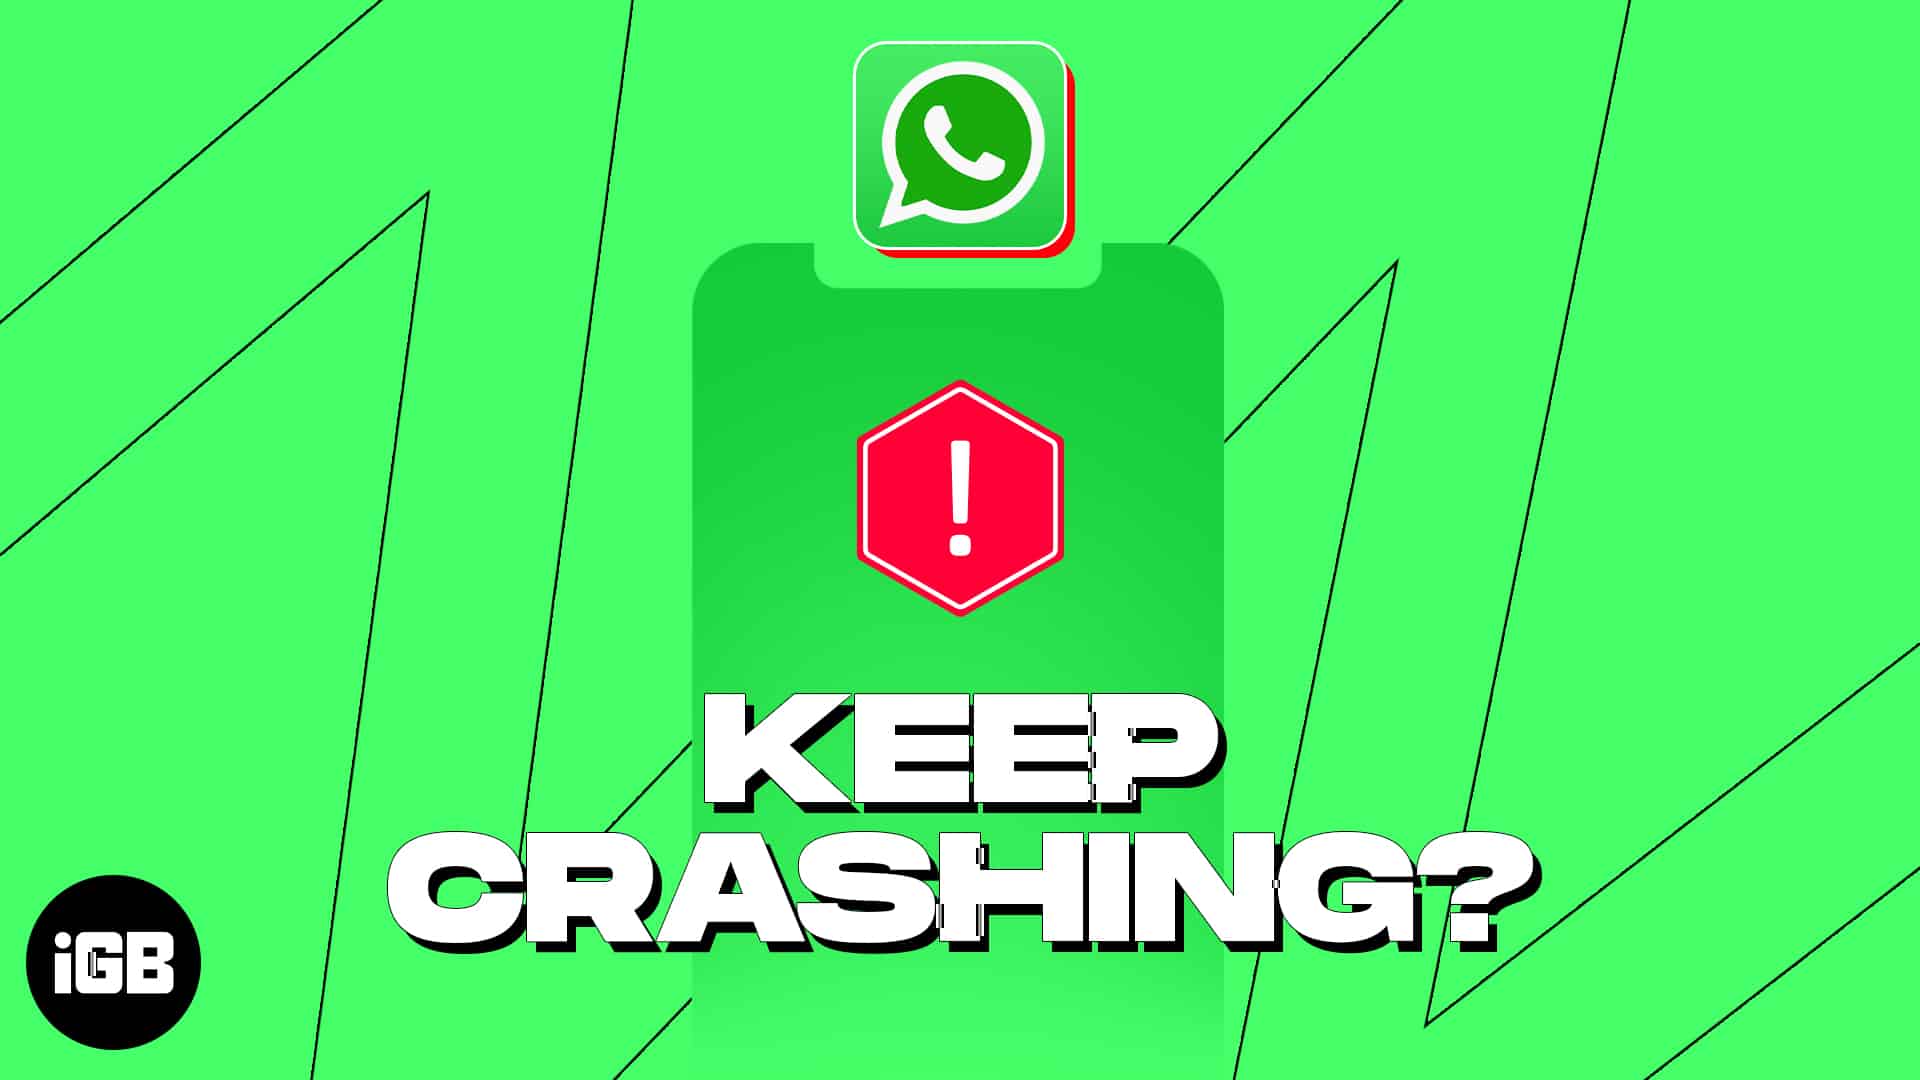 WhatsApp keeps crashing on iPhone? Easy ways to fix it!